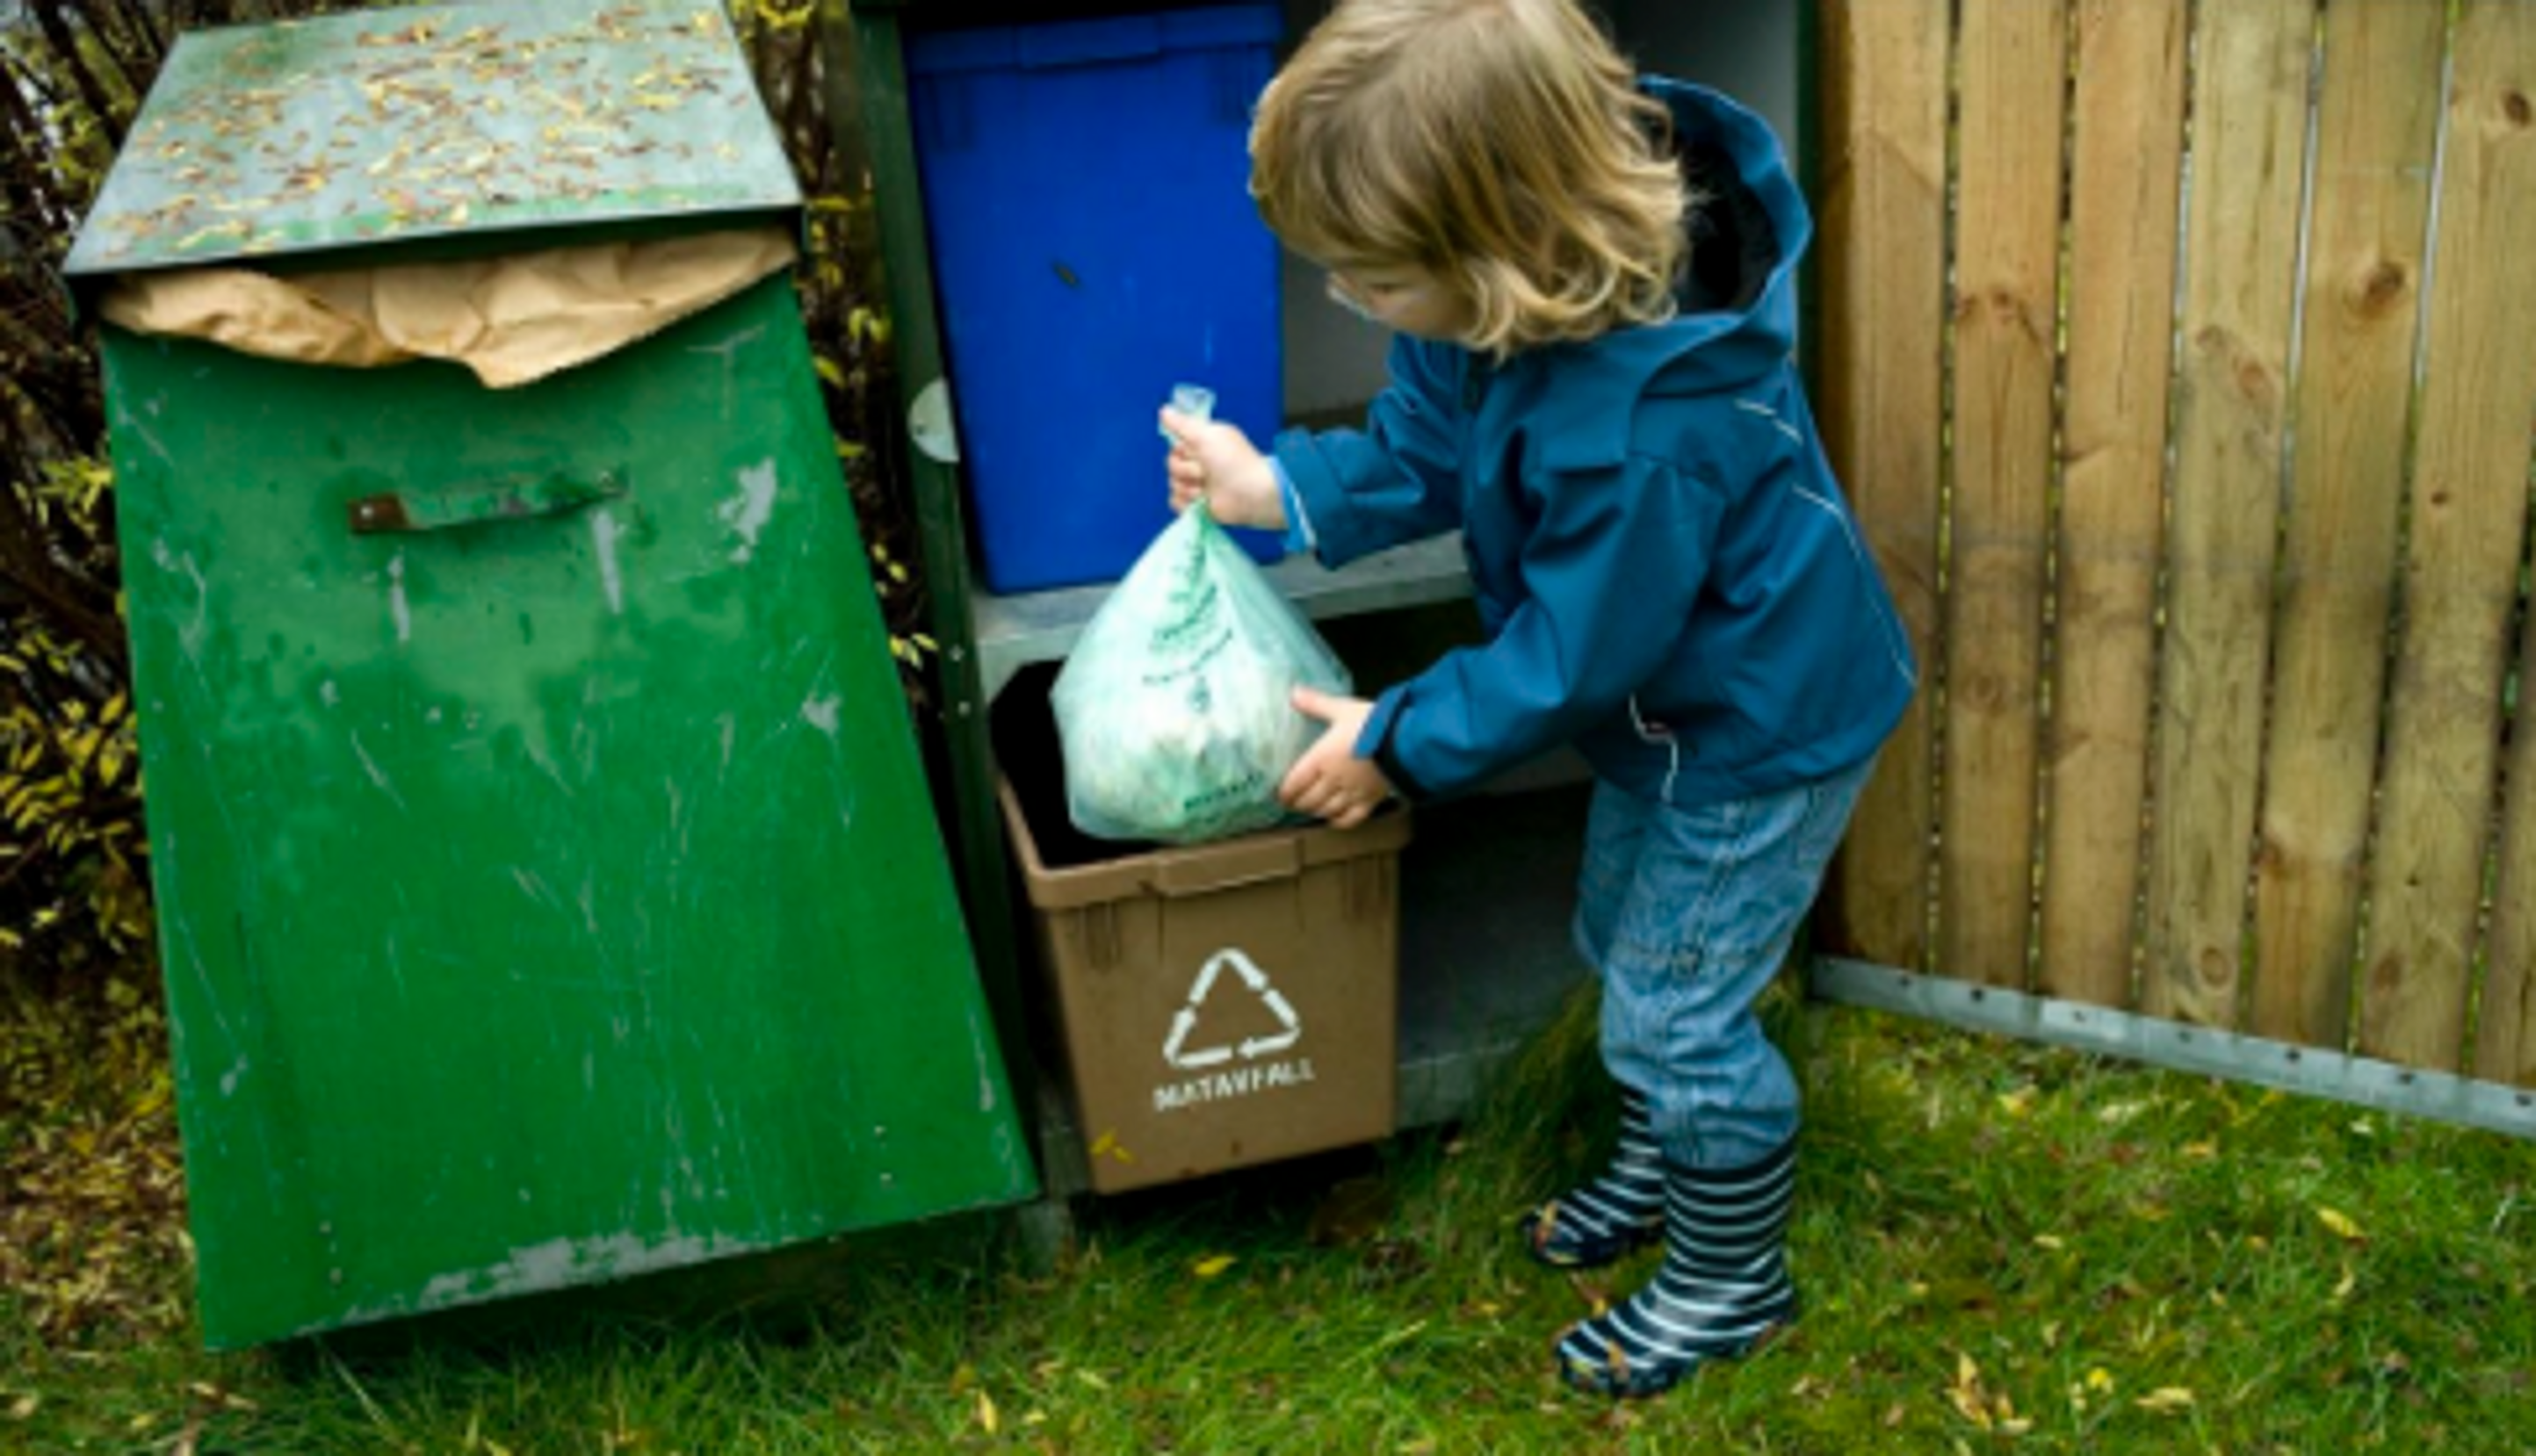 Barn som putter matavfall i søppeldunk.